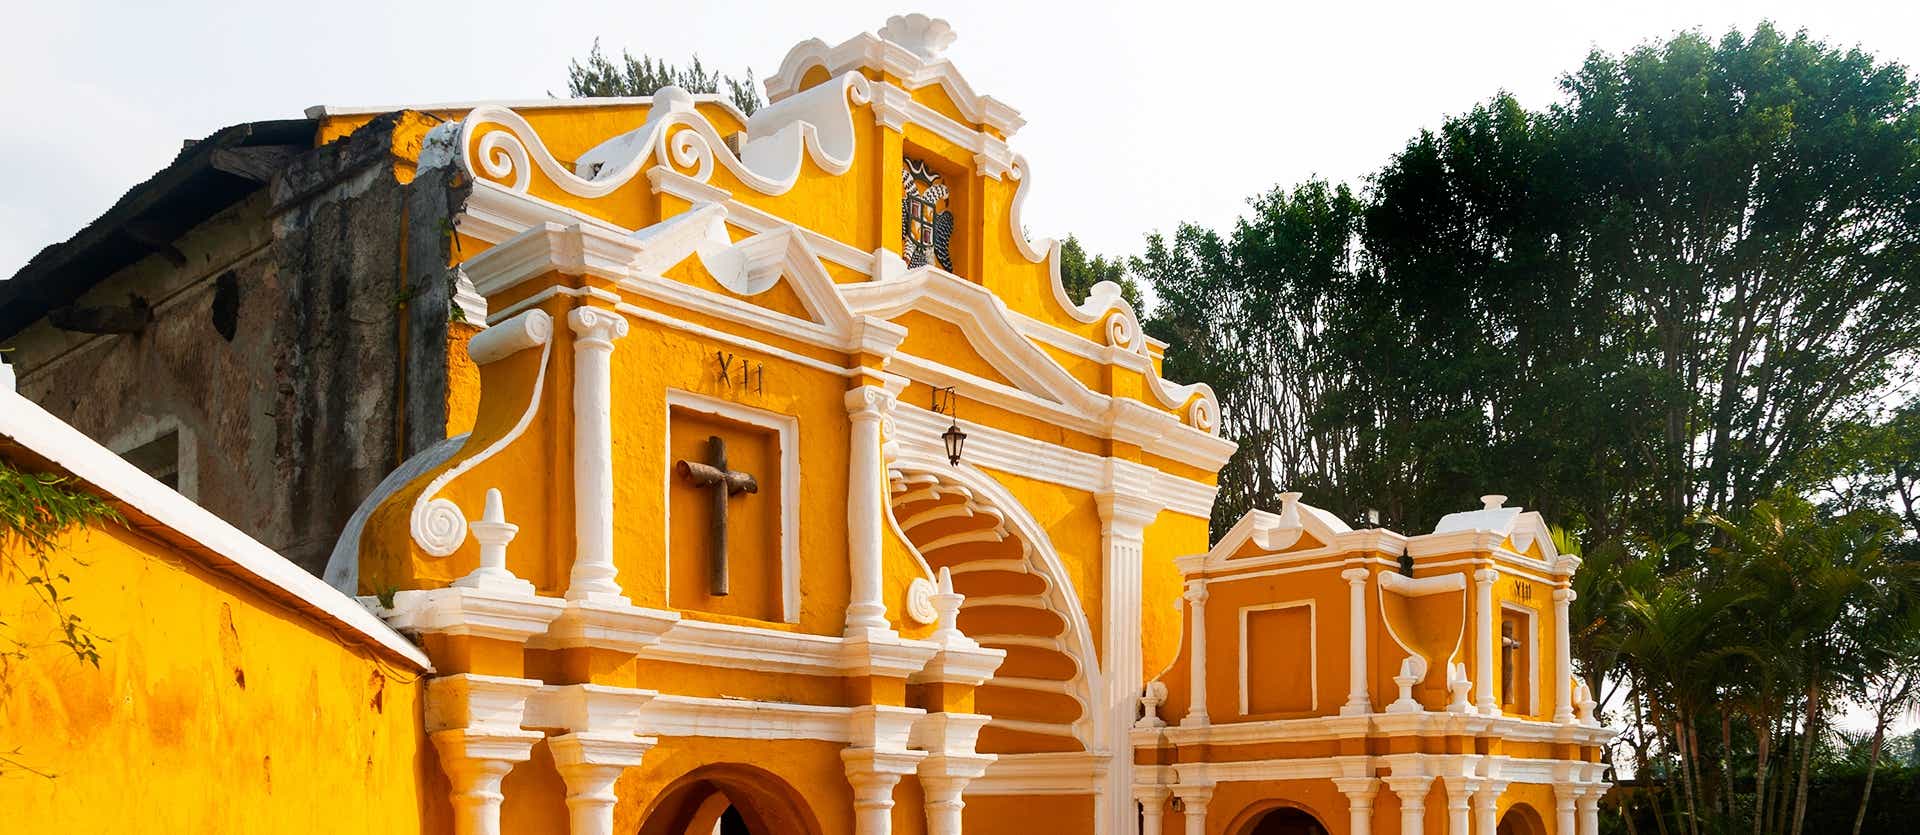 Calvario Hermitage <span class="iconos separador"></span> Antigua Guatemala <span class="iconos separador"></span> Guatemala